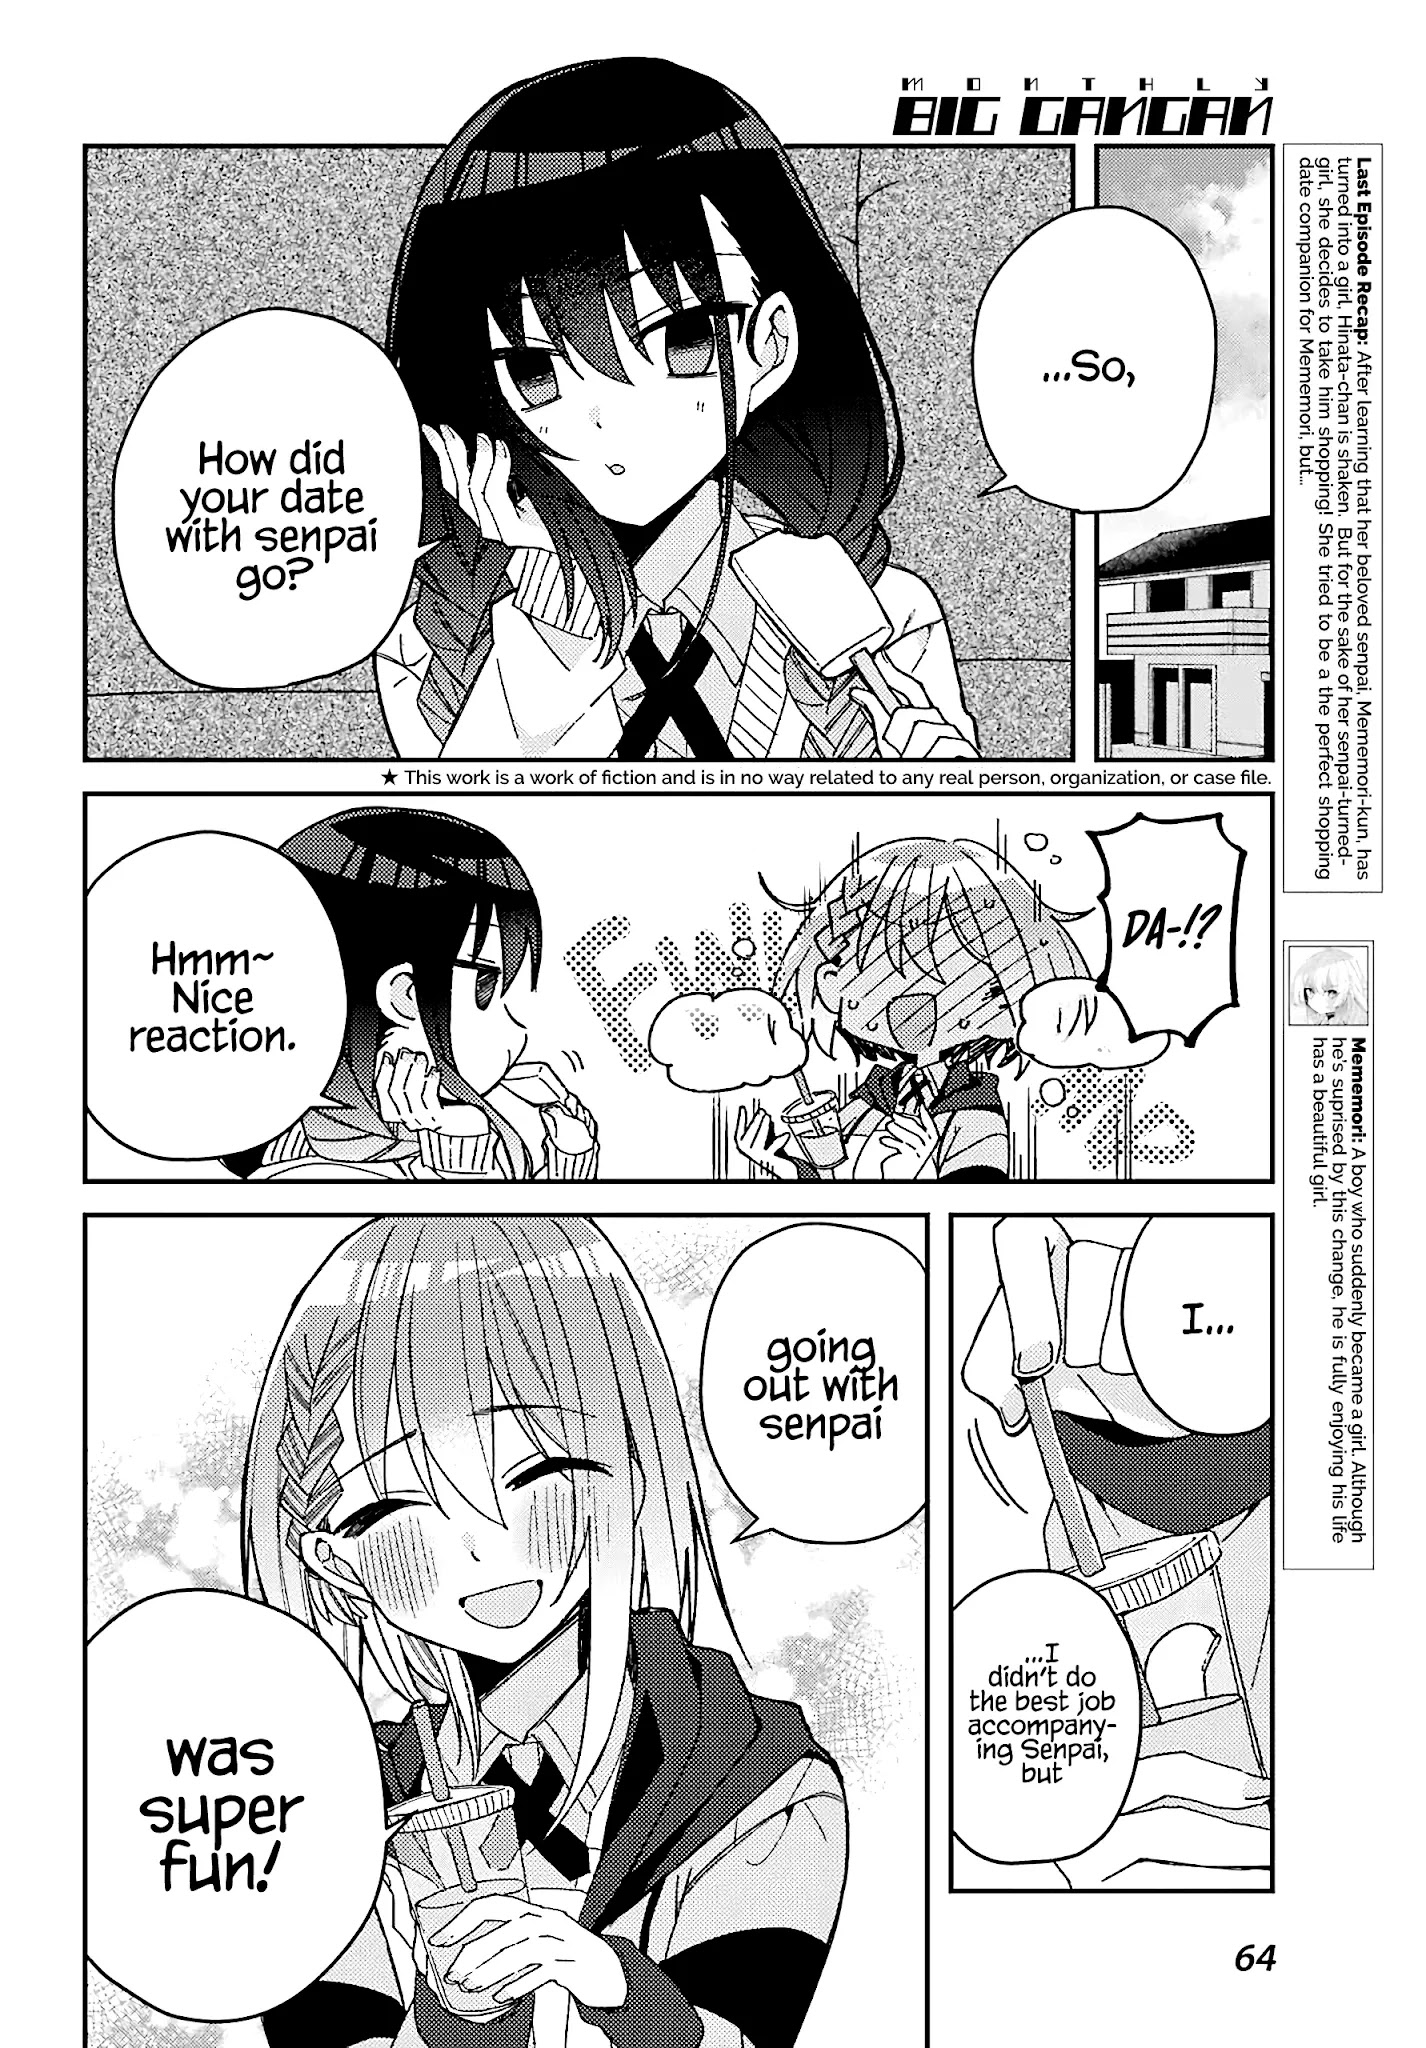 Unparalleled Mememori-Kun - Page 3